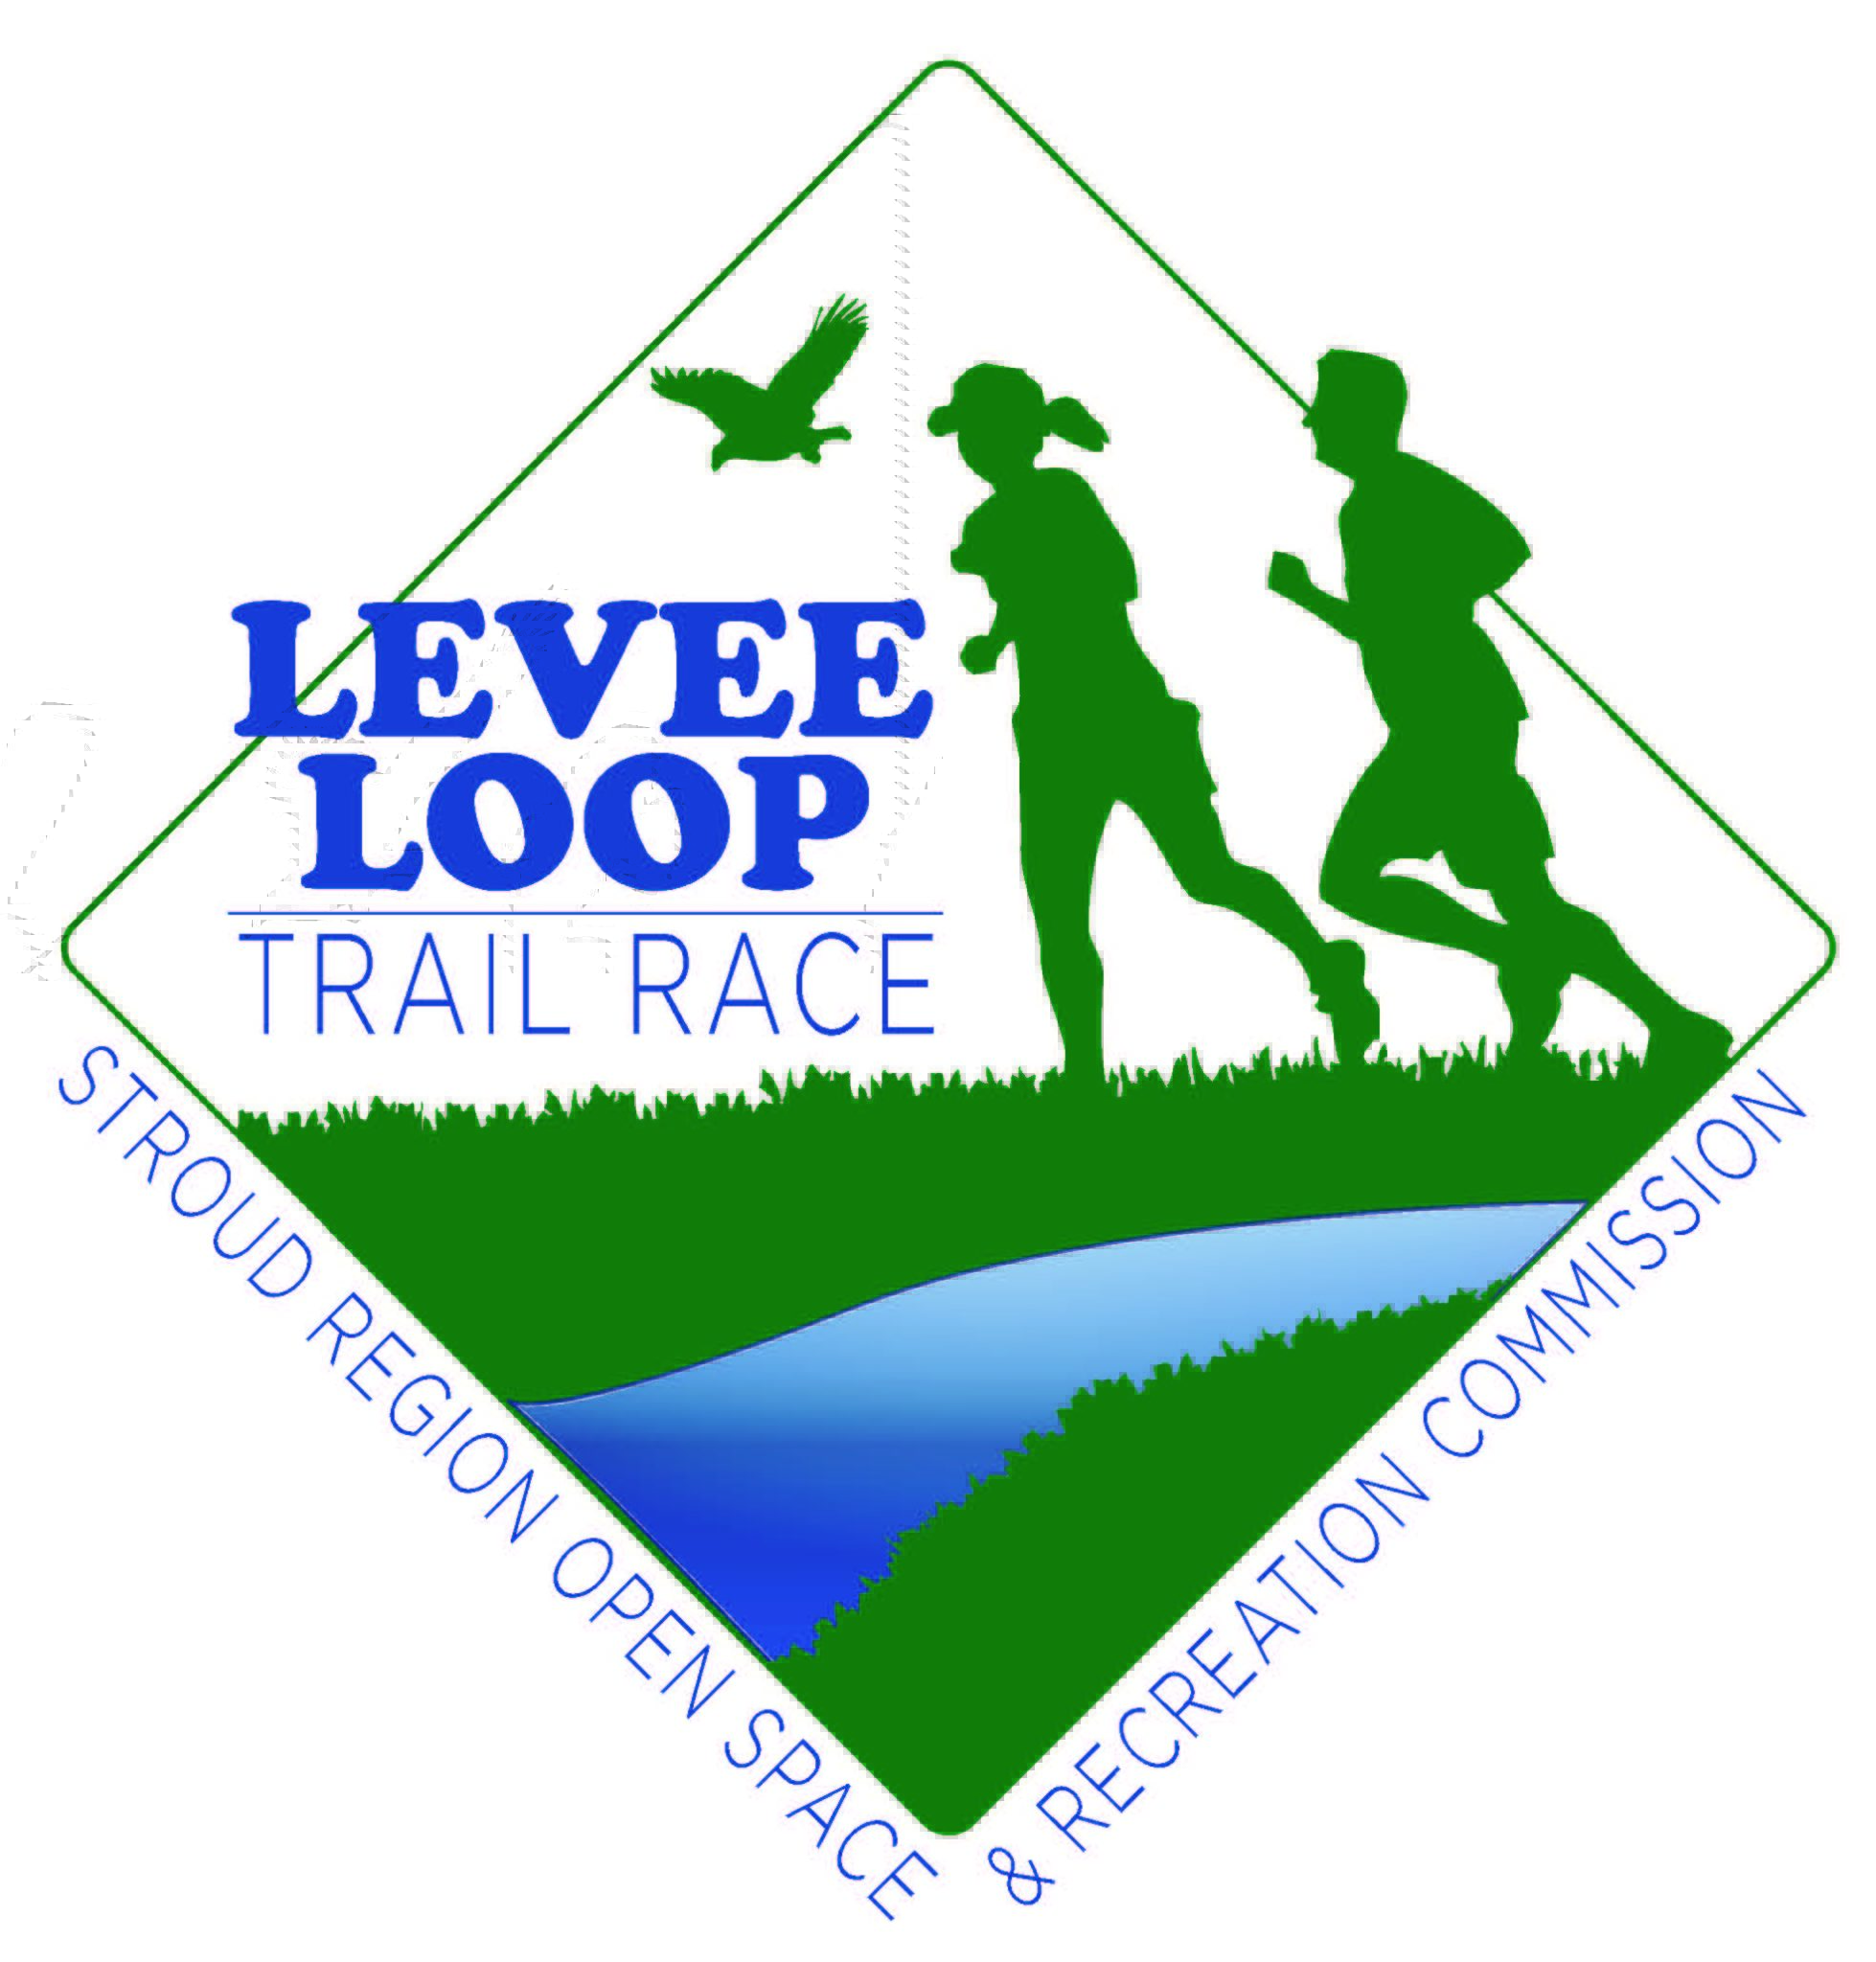 Levee Loop Trail Race & Fitness Walk logo on RaceRaves